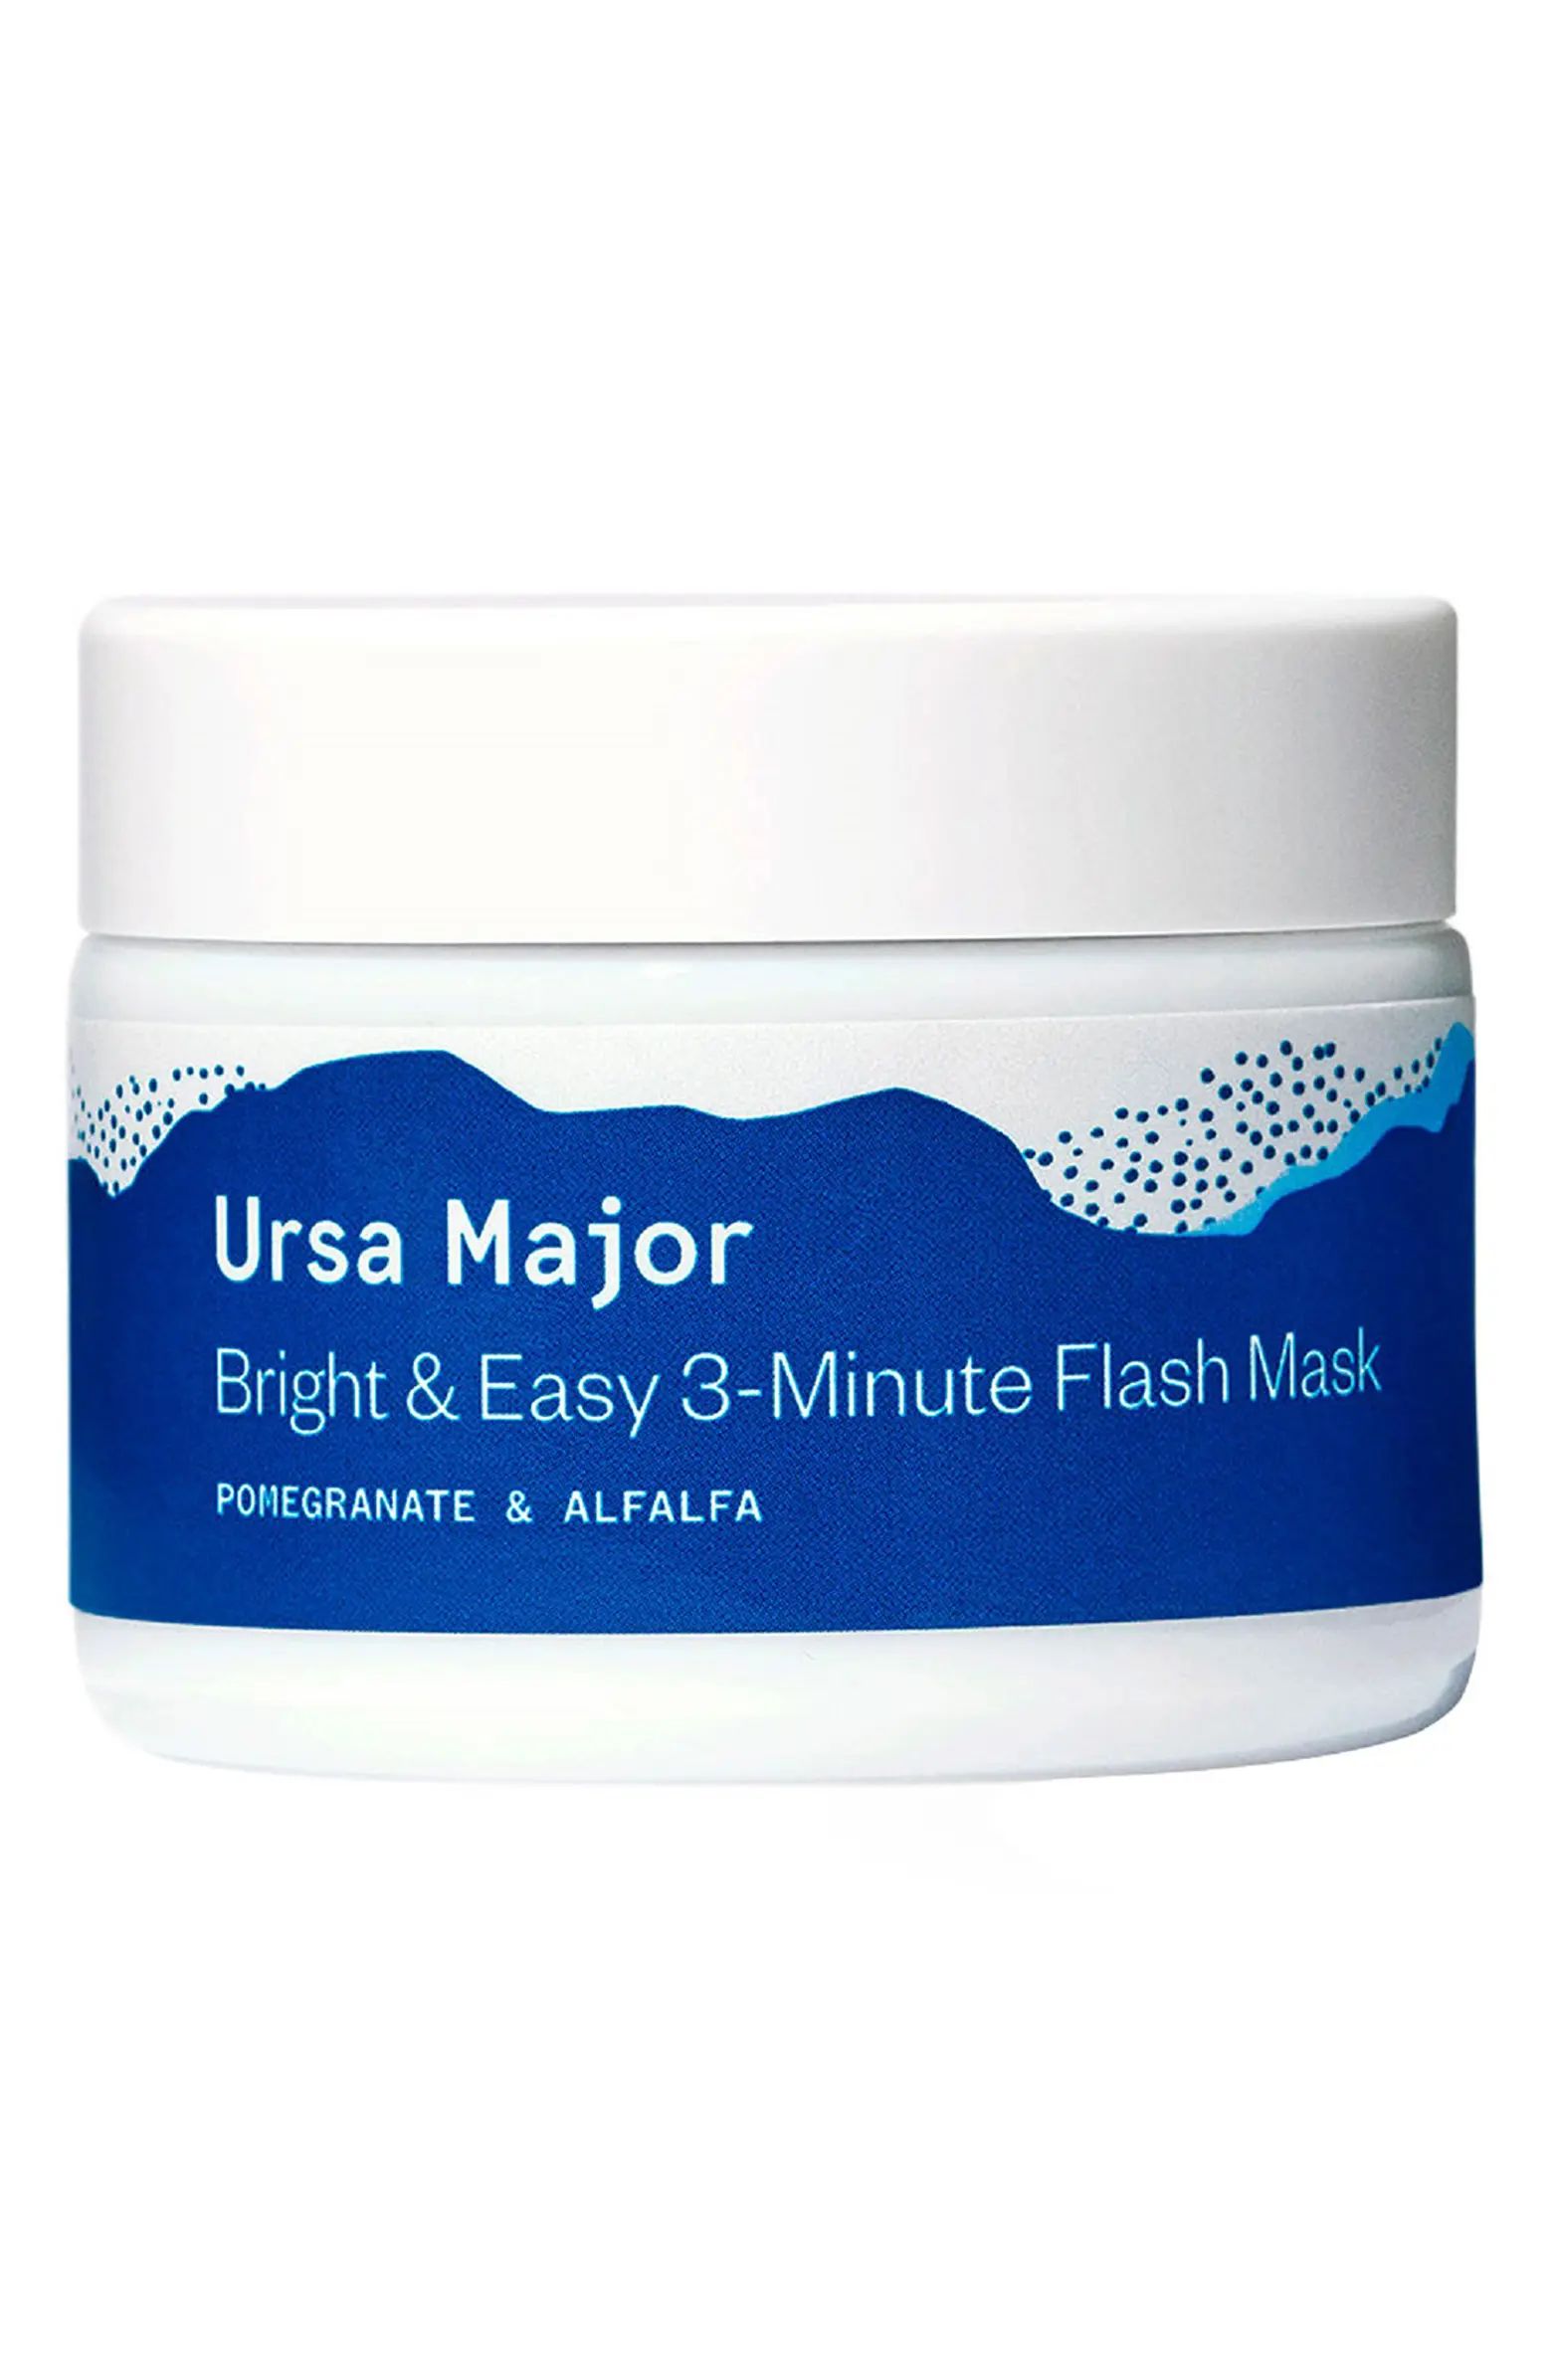 Ursa Major Bright & Easy 3-Minute Flash Mask | Nordstrom | Nordstrom